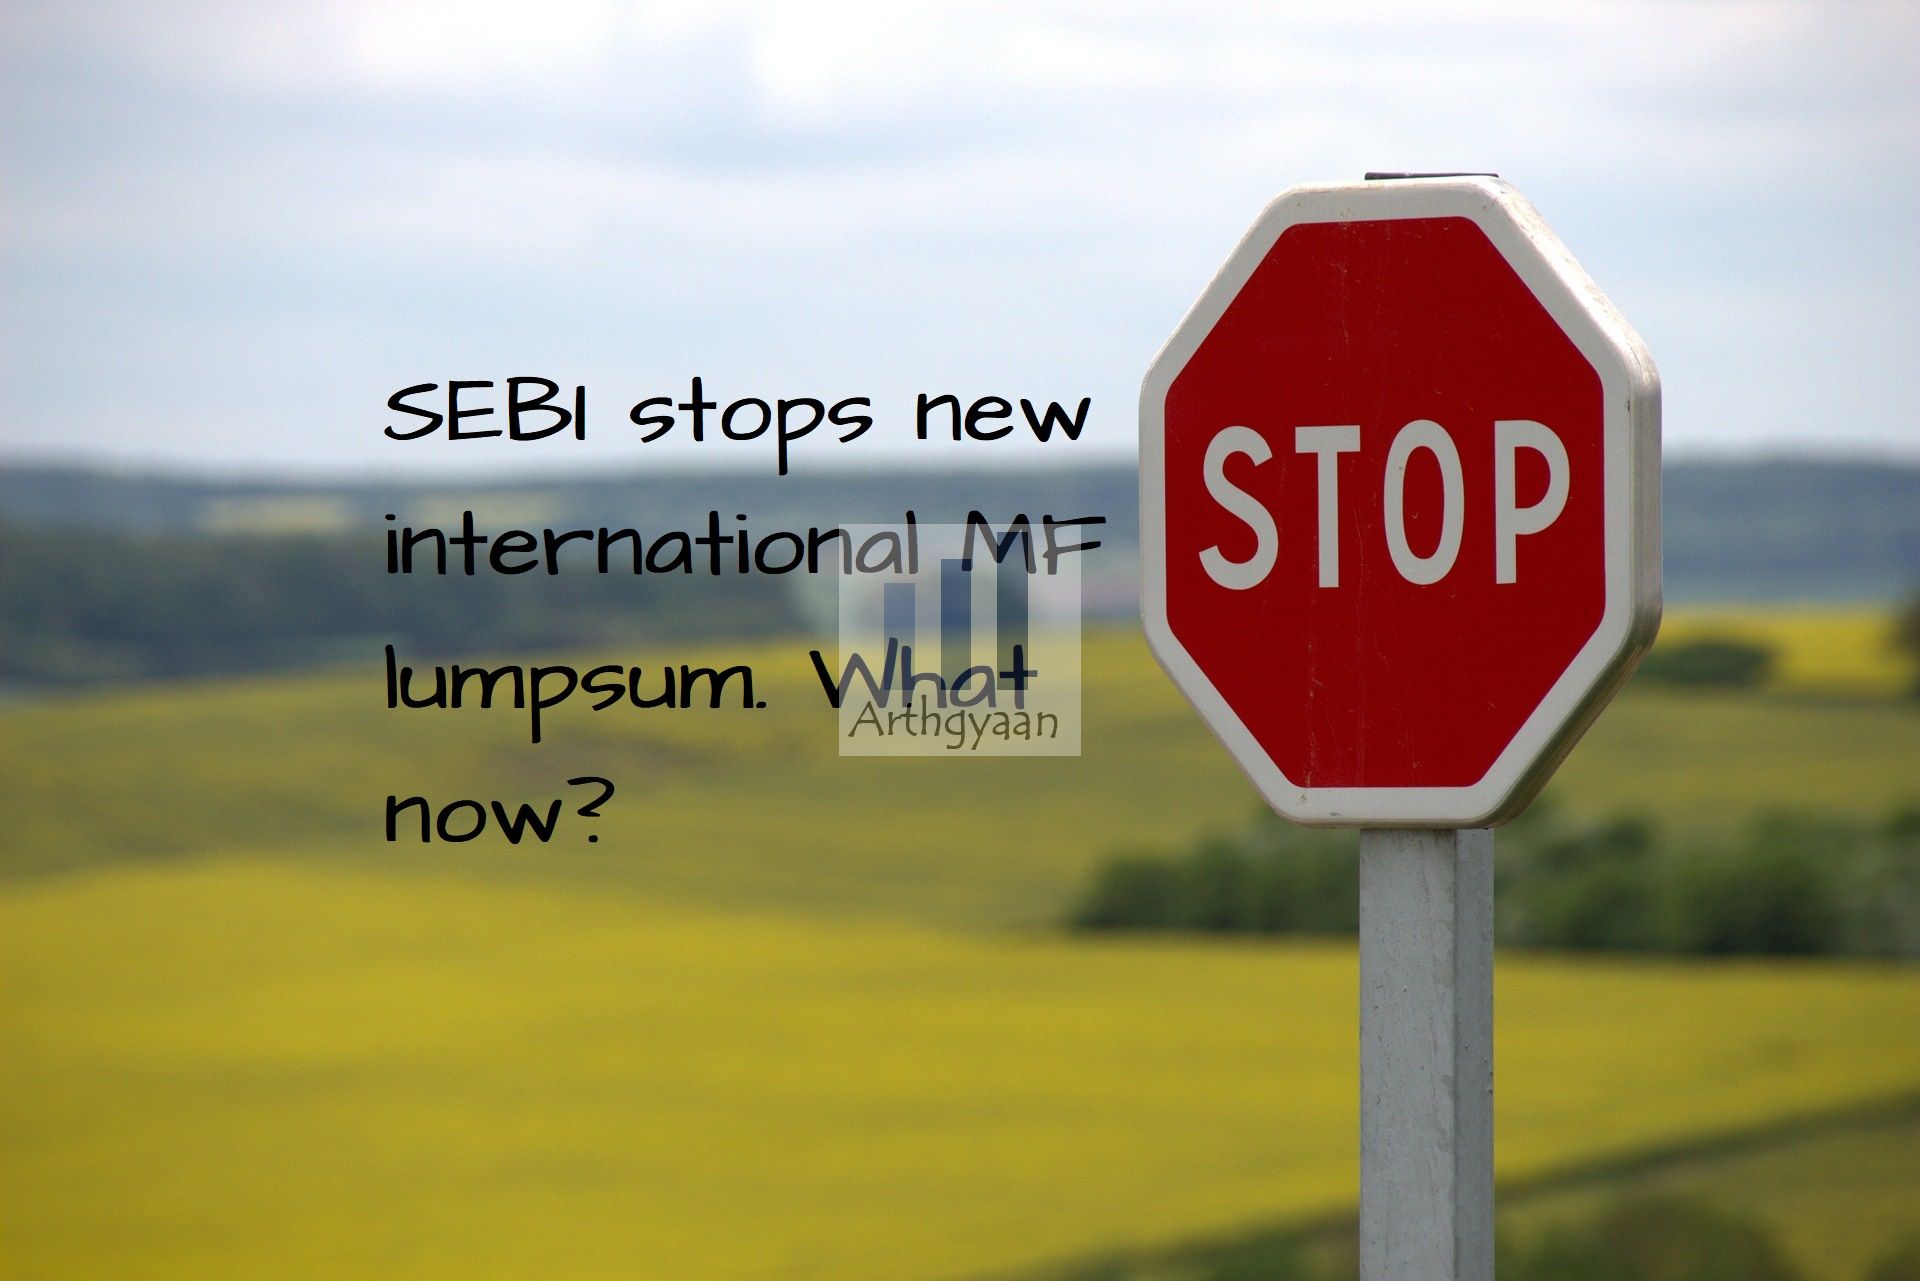 SEBI stops new international MF lump sum investments. What should investors do now?